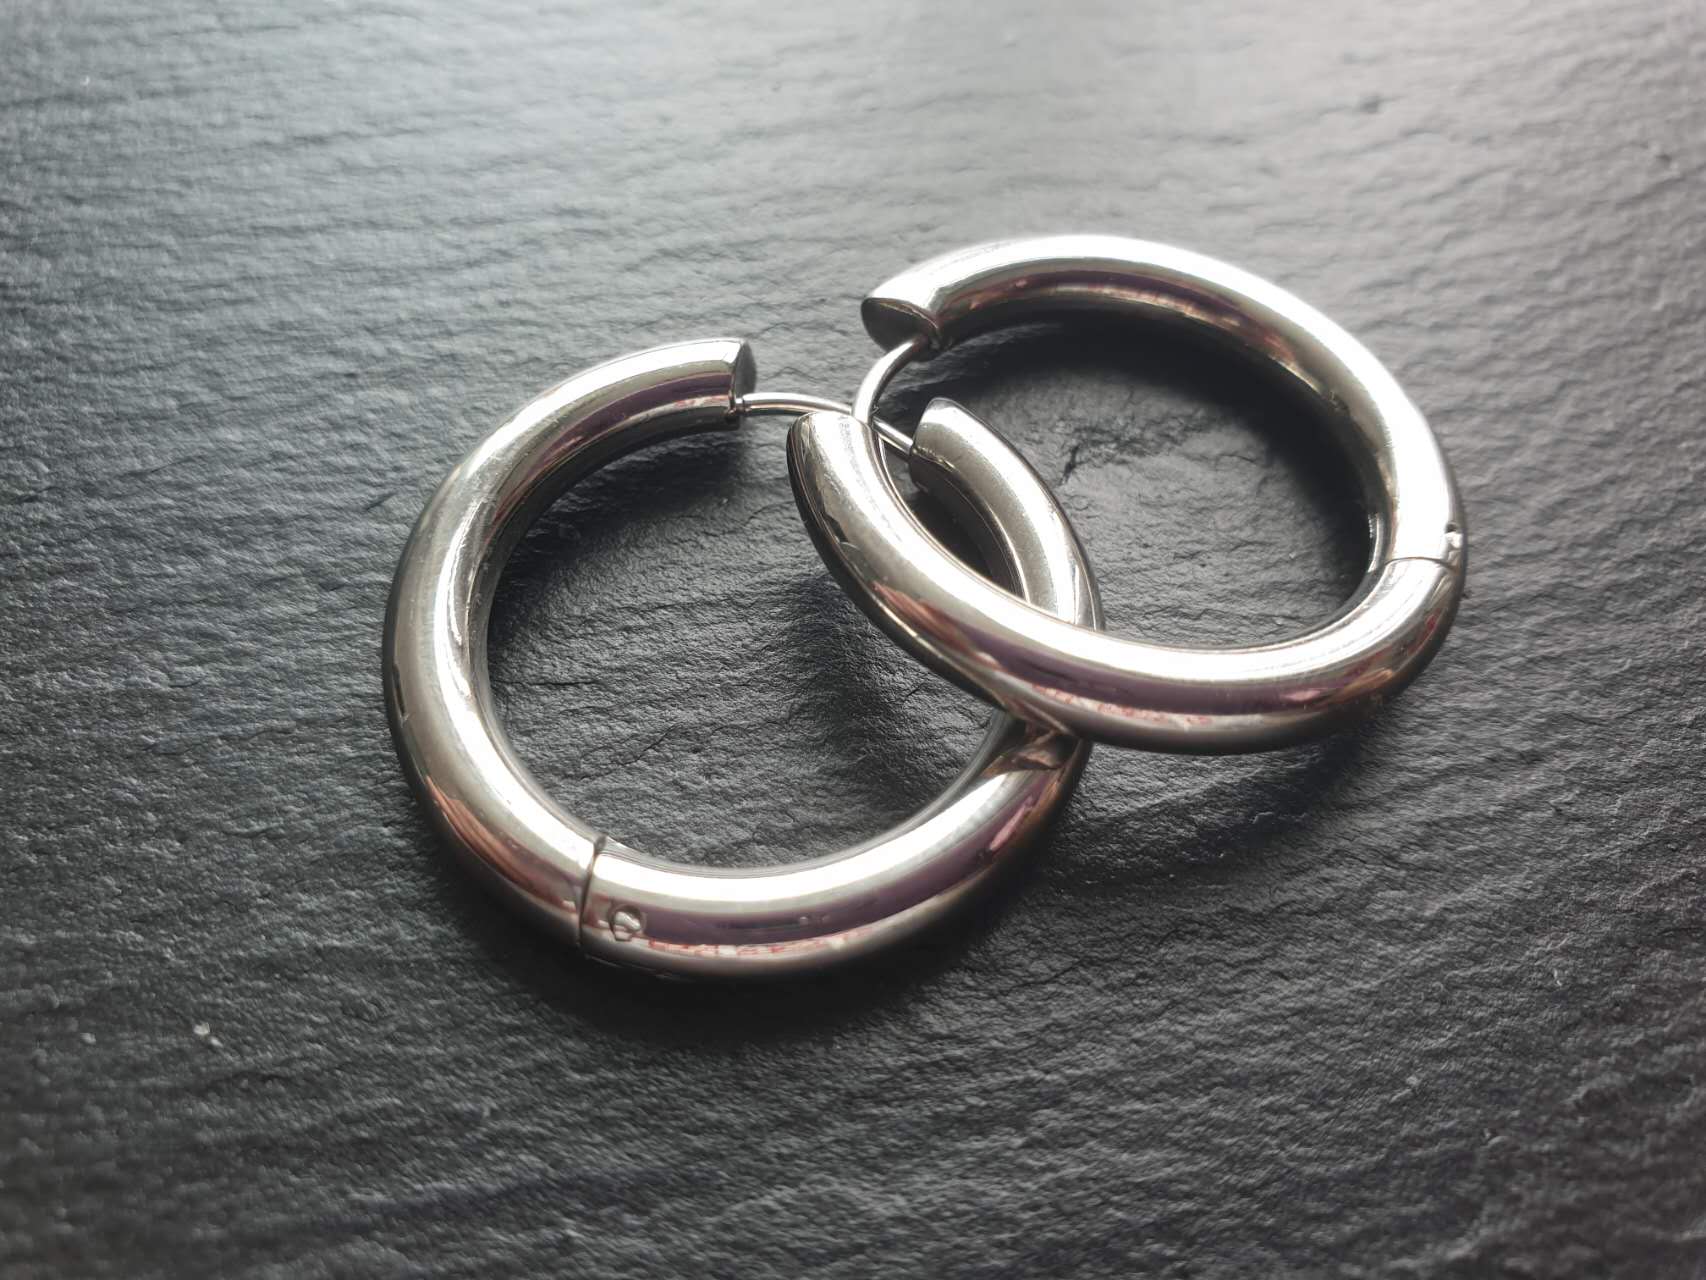 S. Steel hoop earrings - 28mm x 4mm/ high gloss